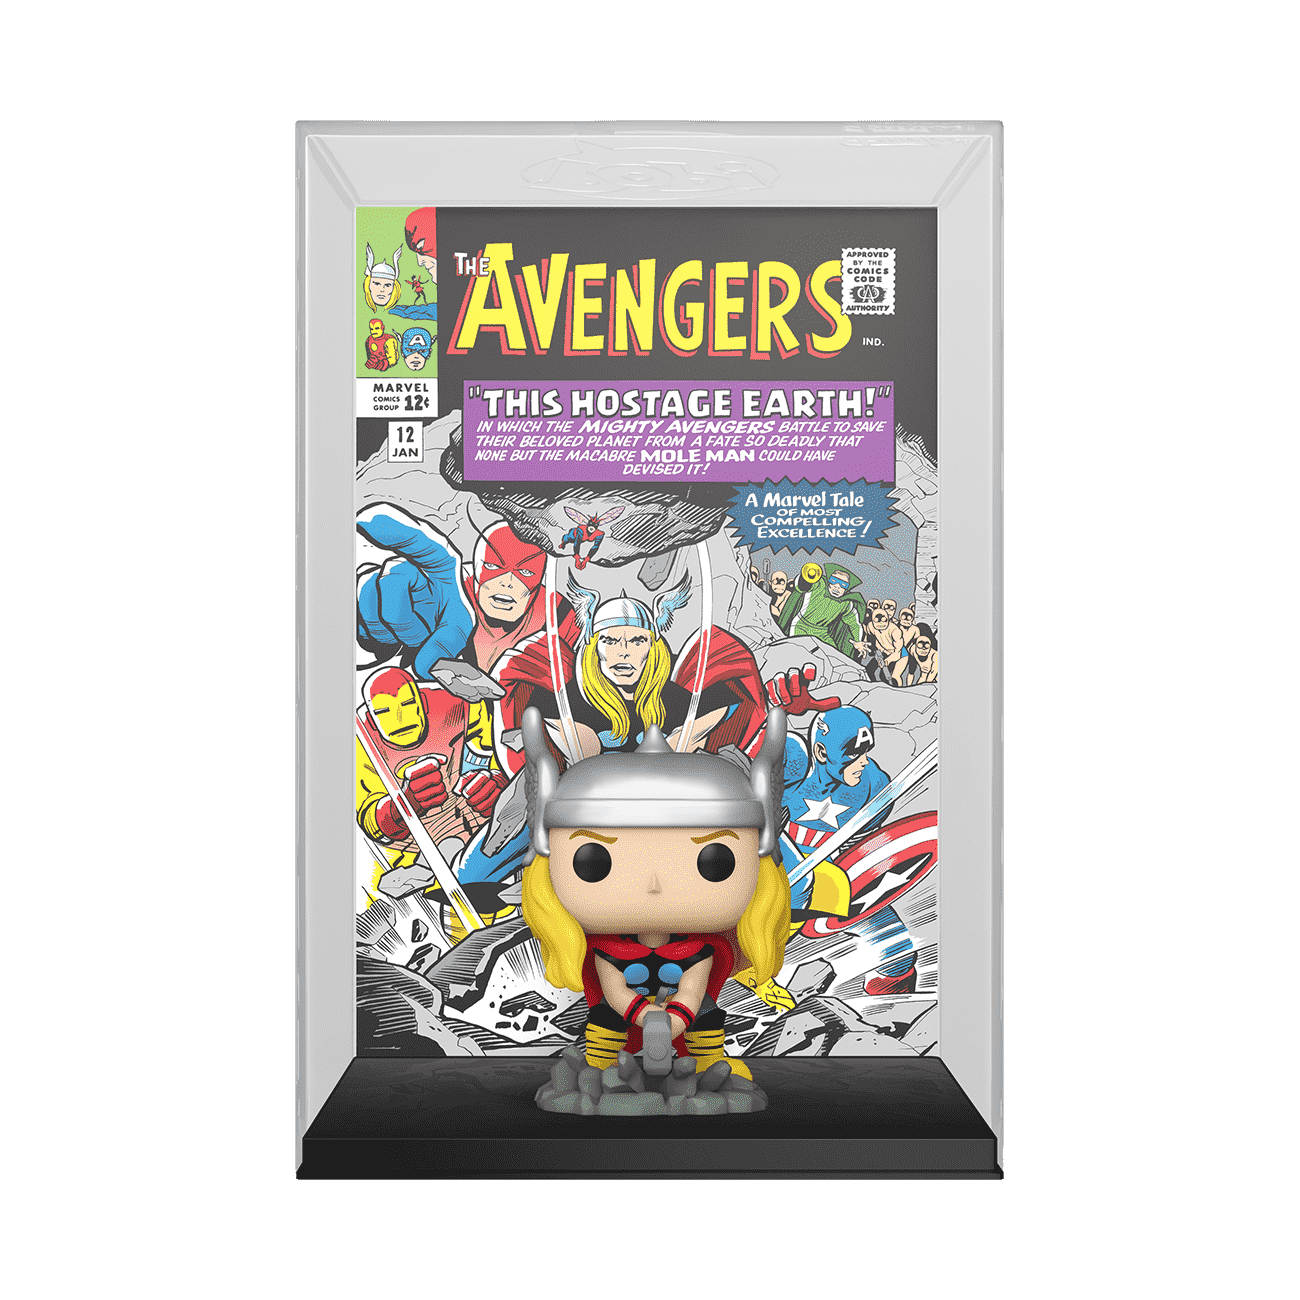 Funko Pop! Marvel Avengers Thor Bobble-Head Figure #12 - US